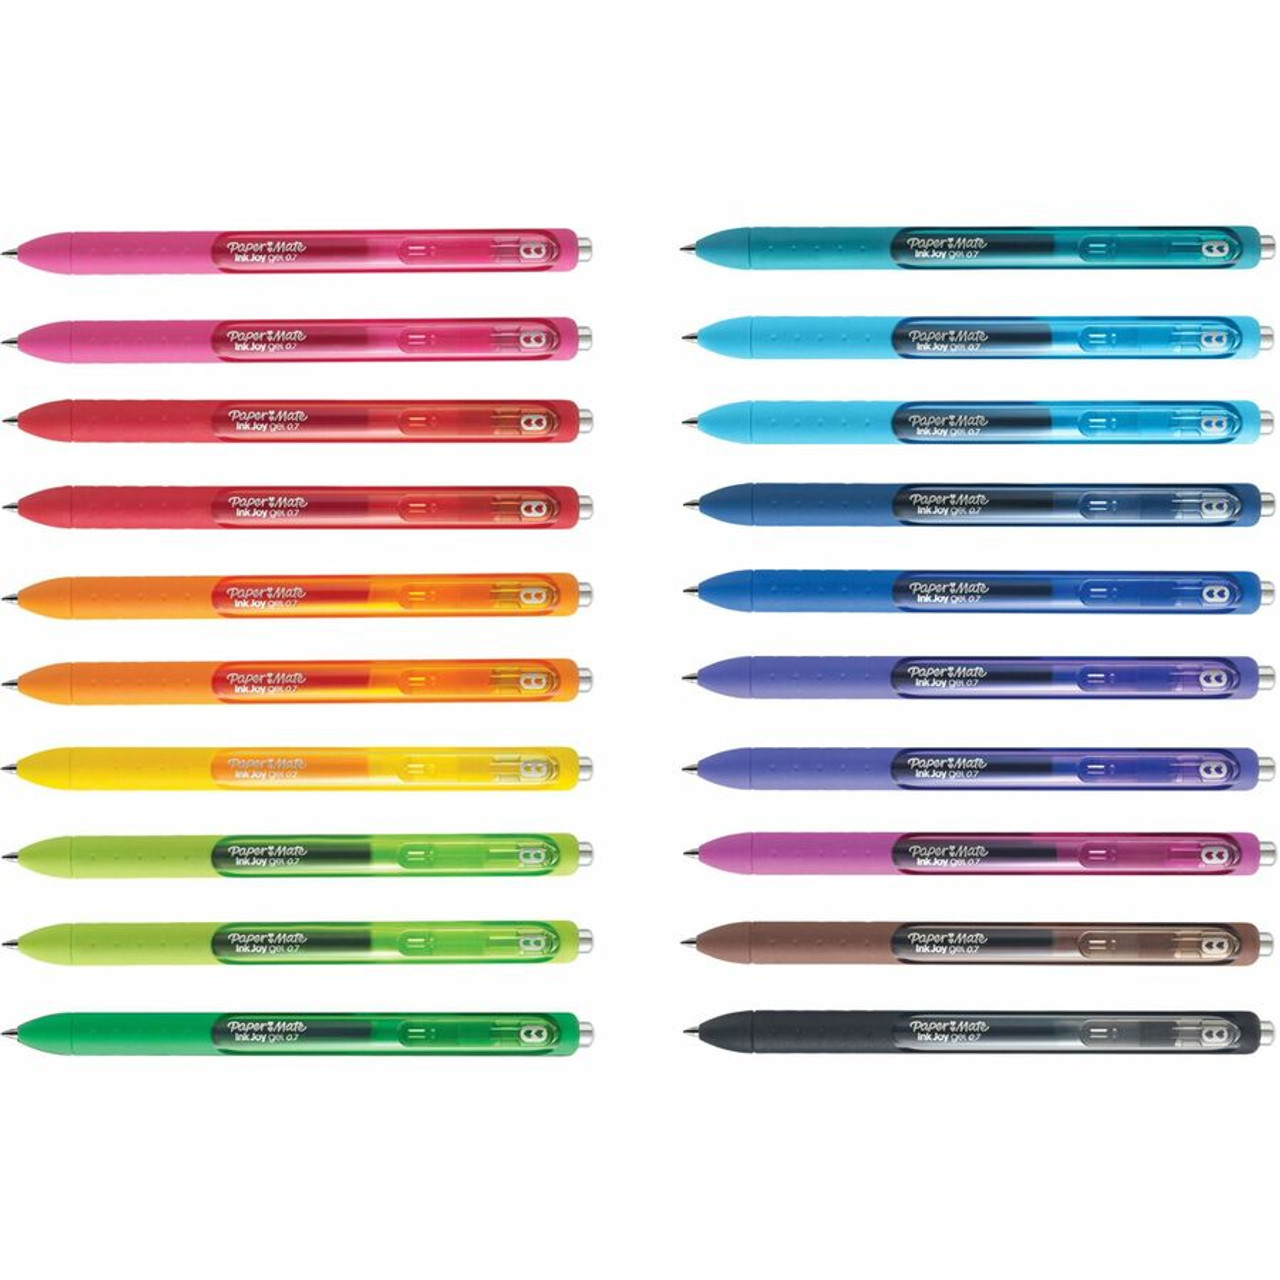 Paper Mate InkJoy® Gel Pens, Medium Point, 0.7 mm